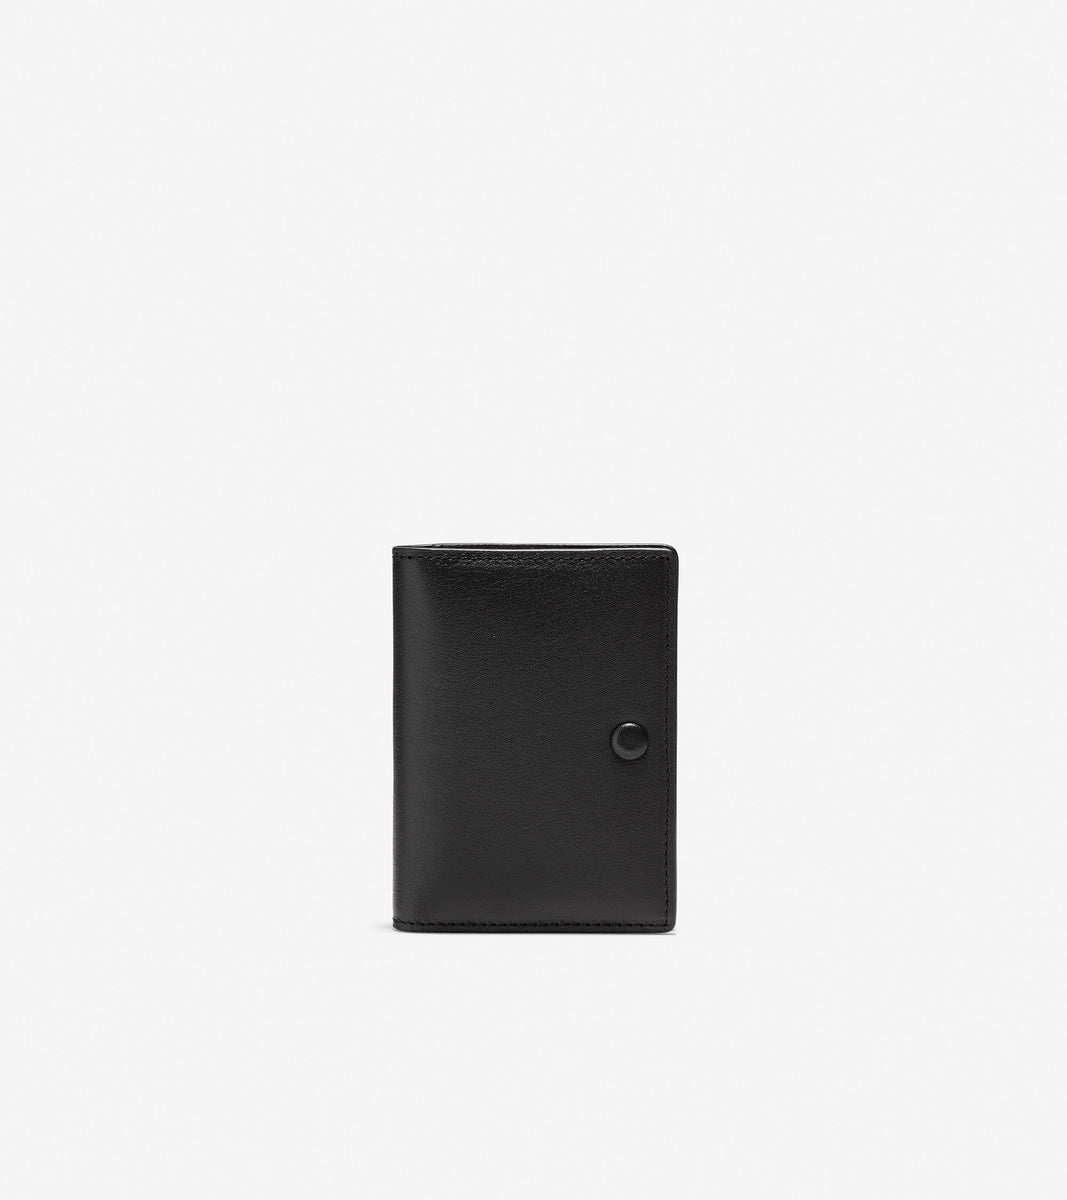 ColeHaan-GRANDSERIES Card Case-u04200-Black